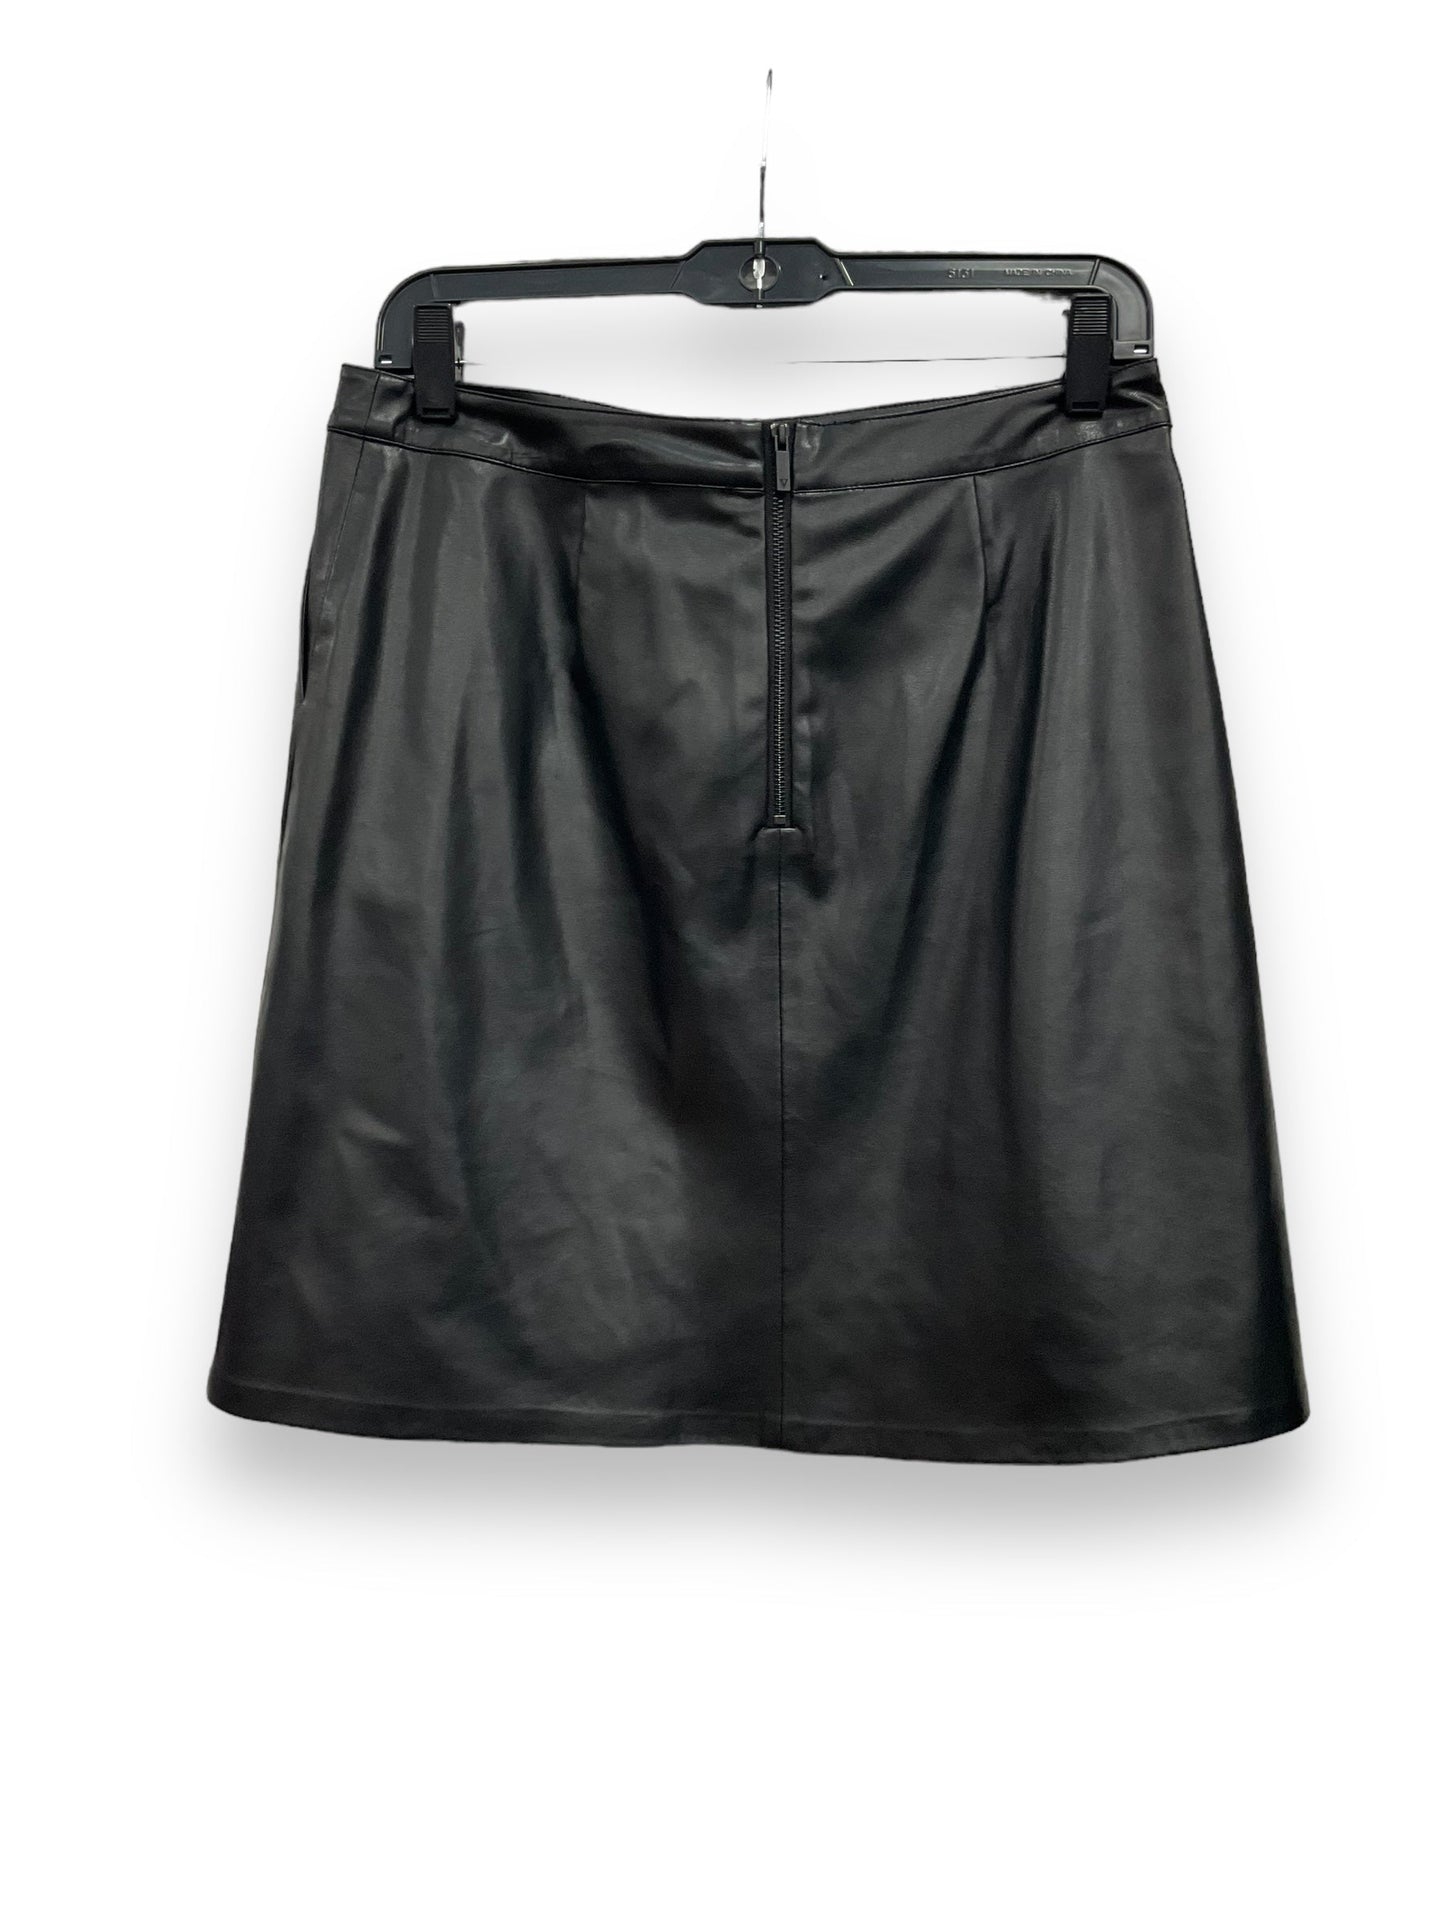 Black Skirt Midi Vince Camuto, Size S